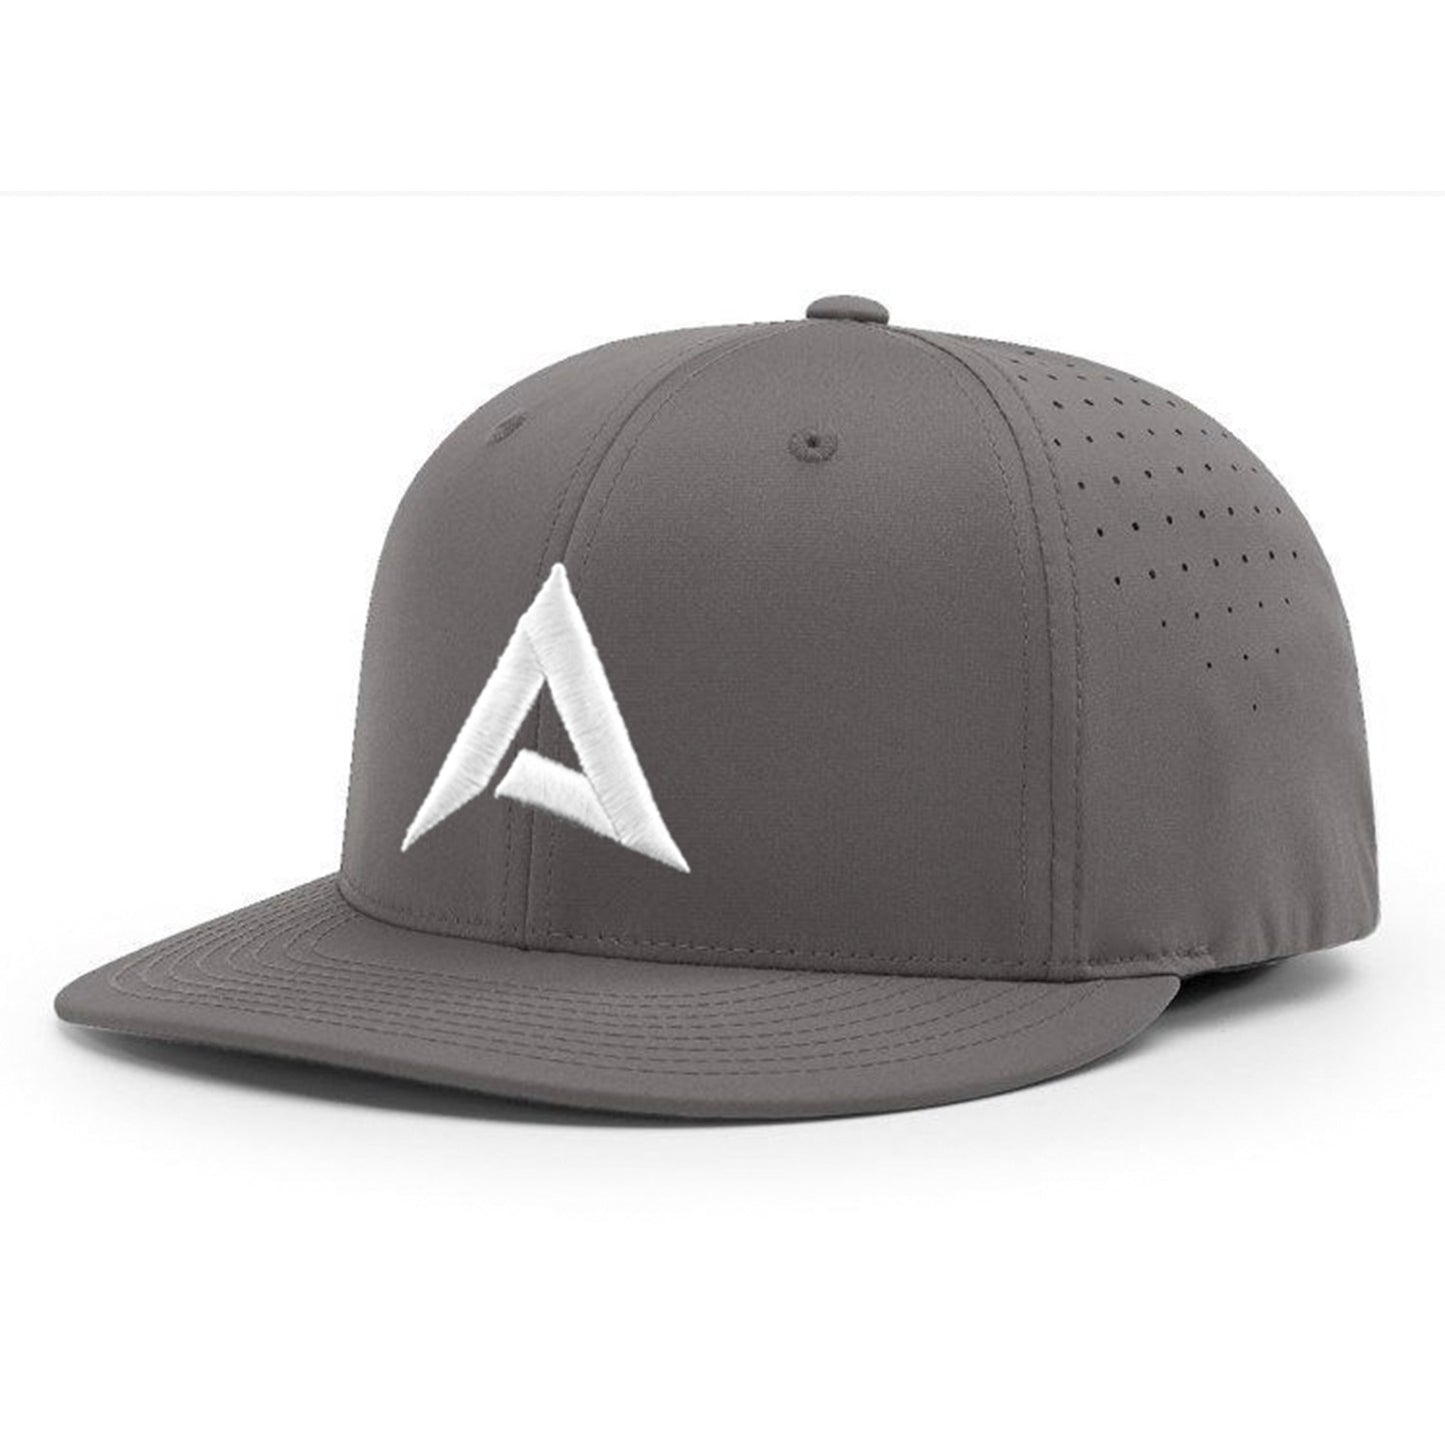 Anarchy CA i8503 Performance Hat - New Logo - Char/White